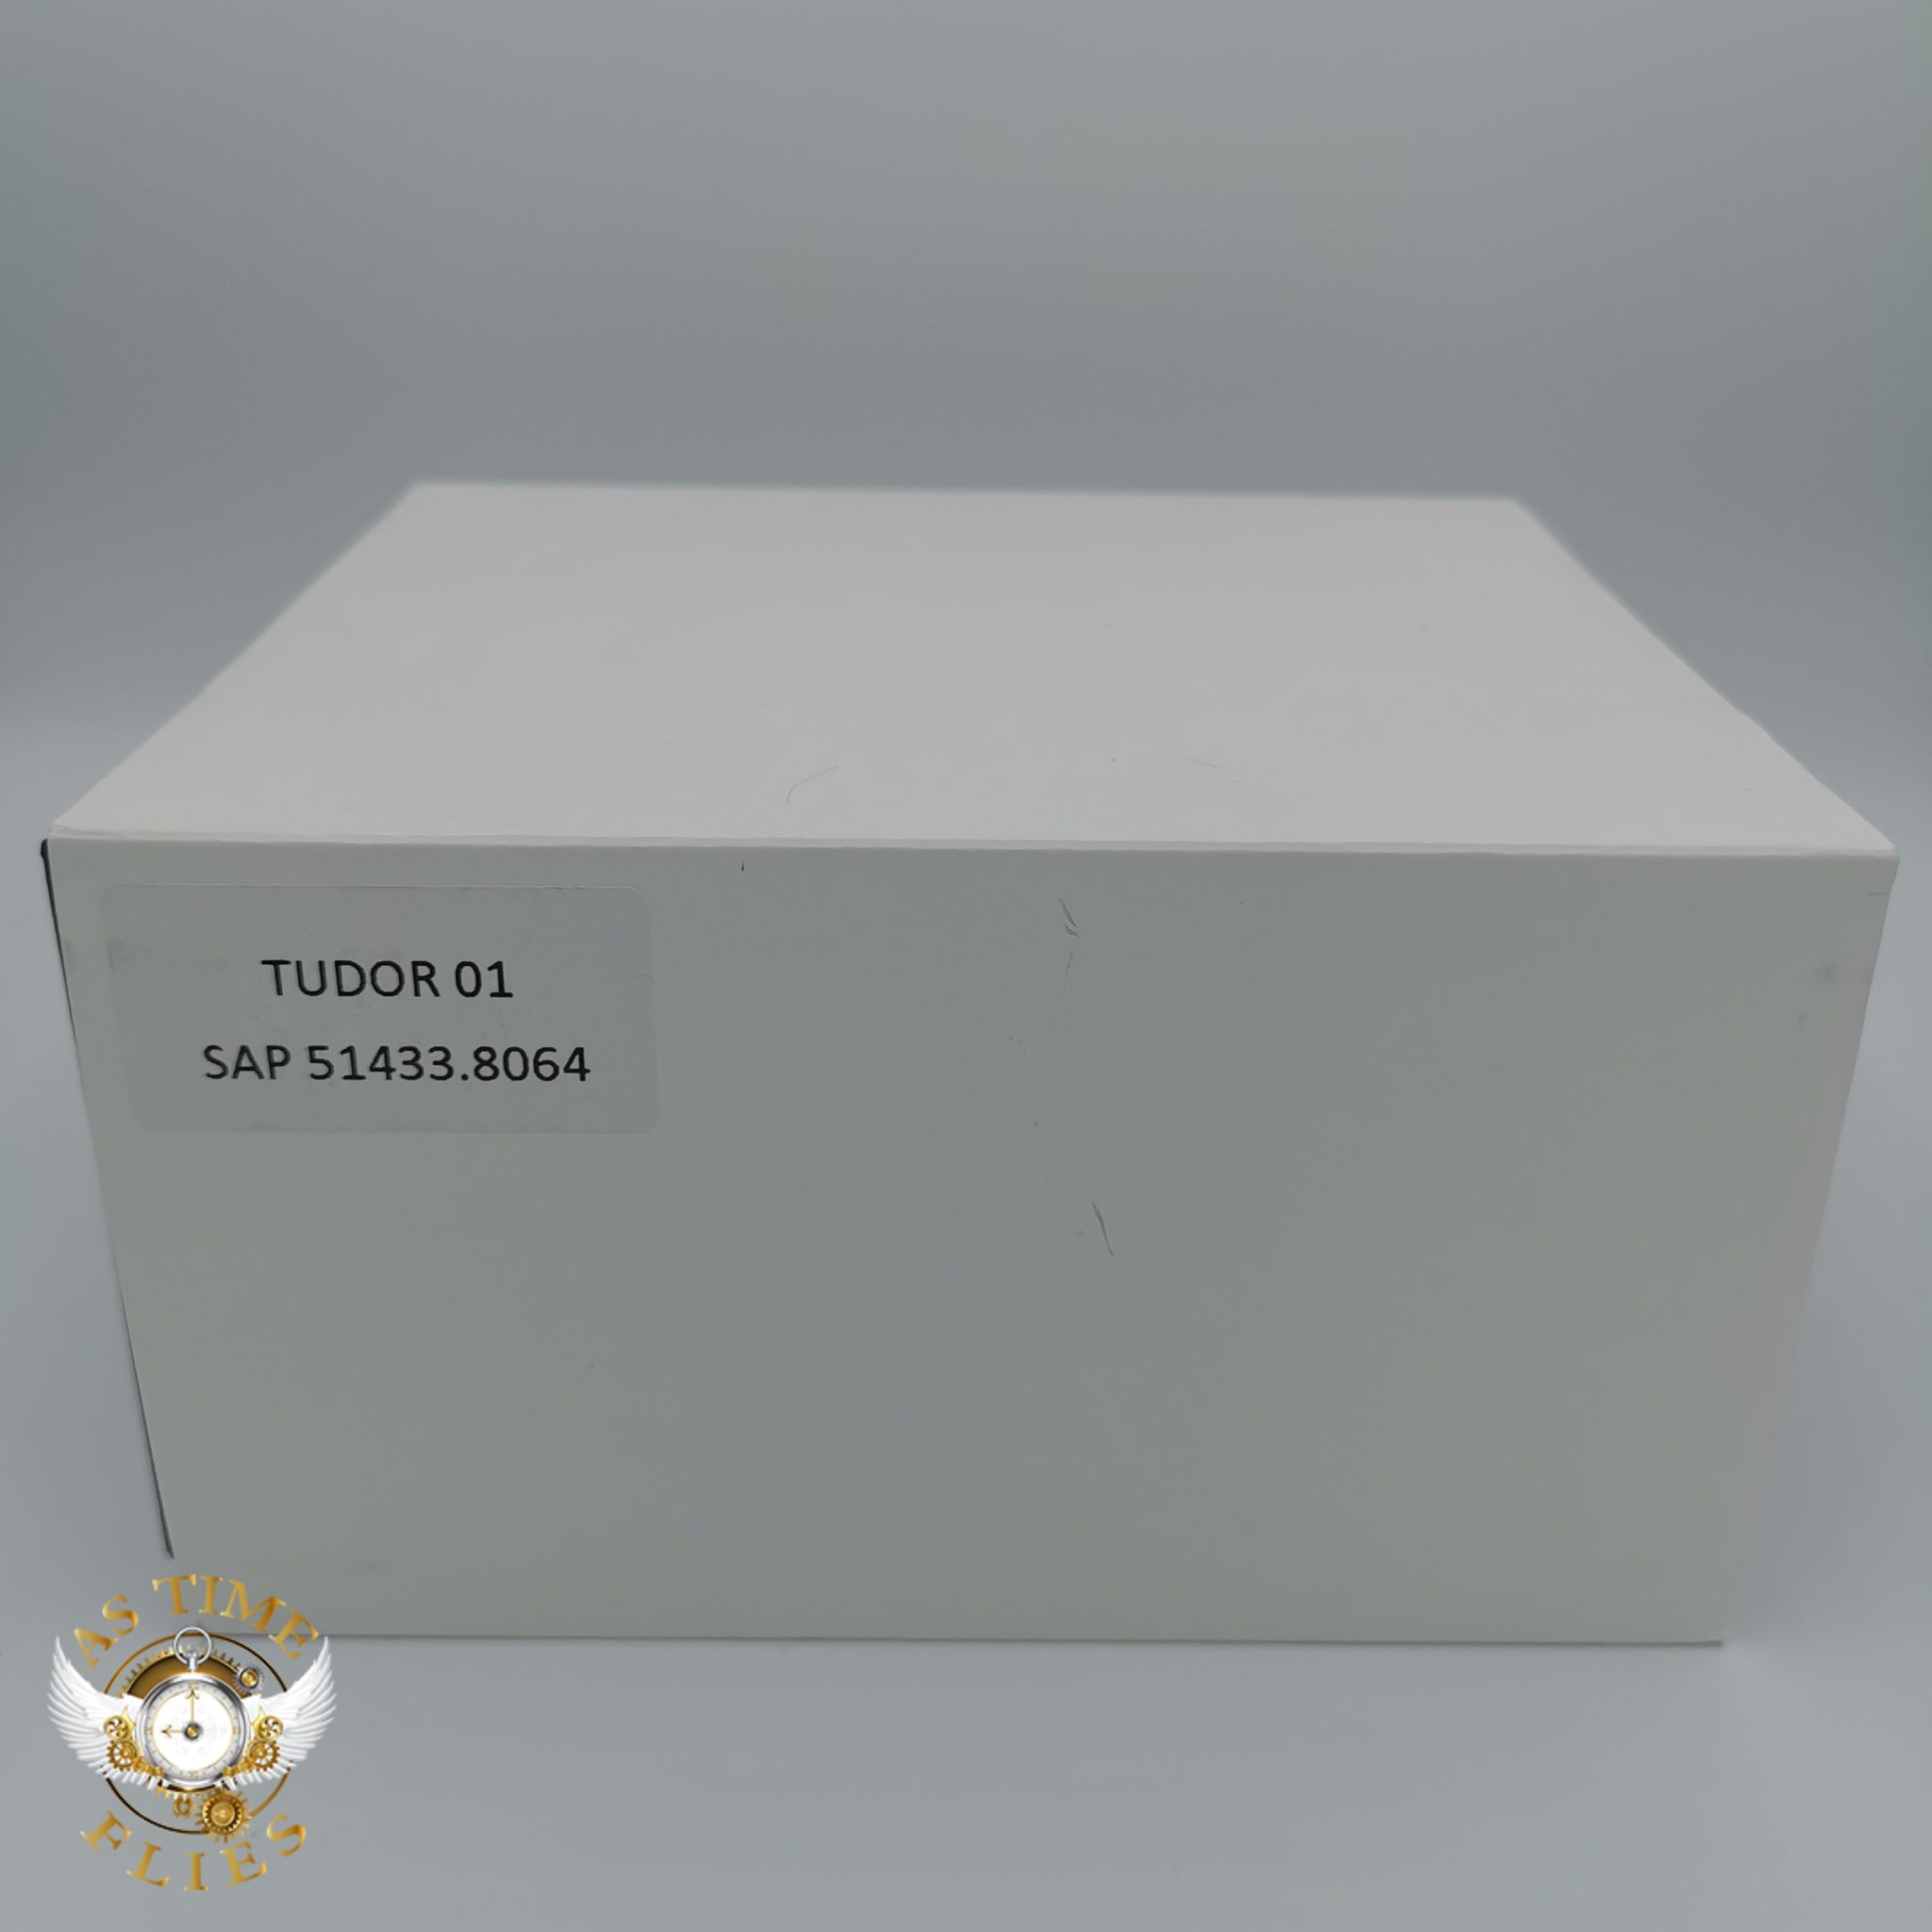 Tudor Royal M28600-0002 '23 card, box and papers